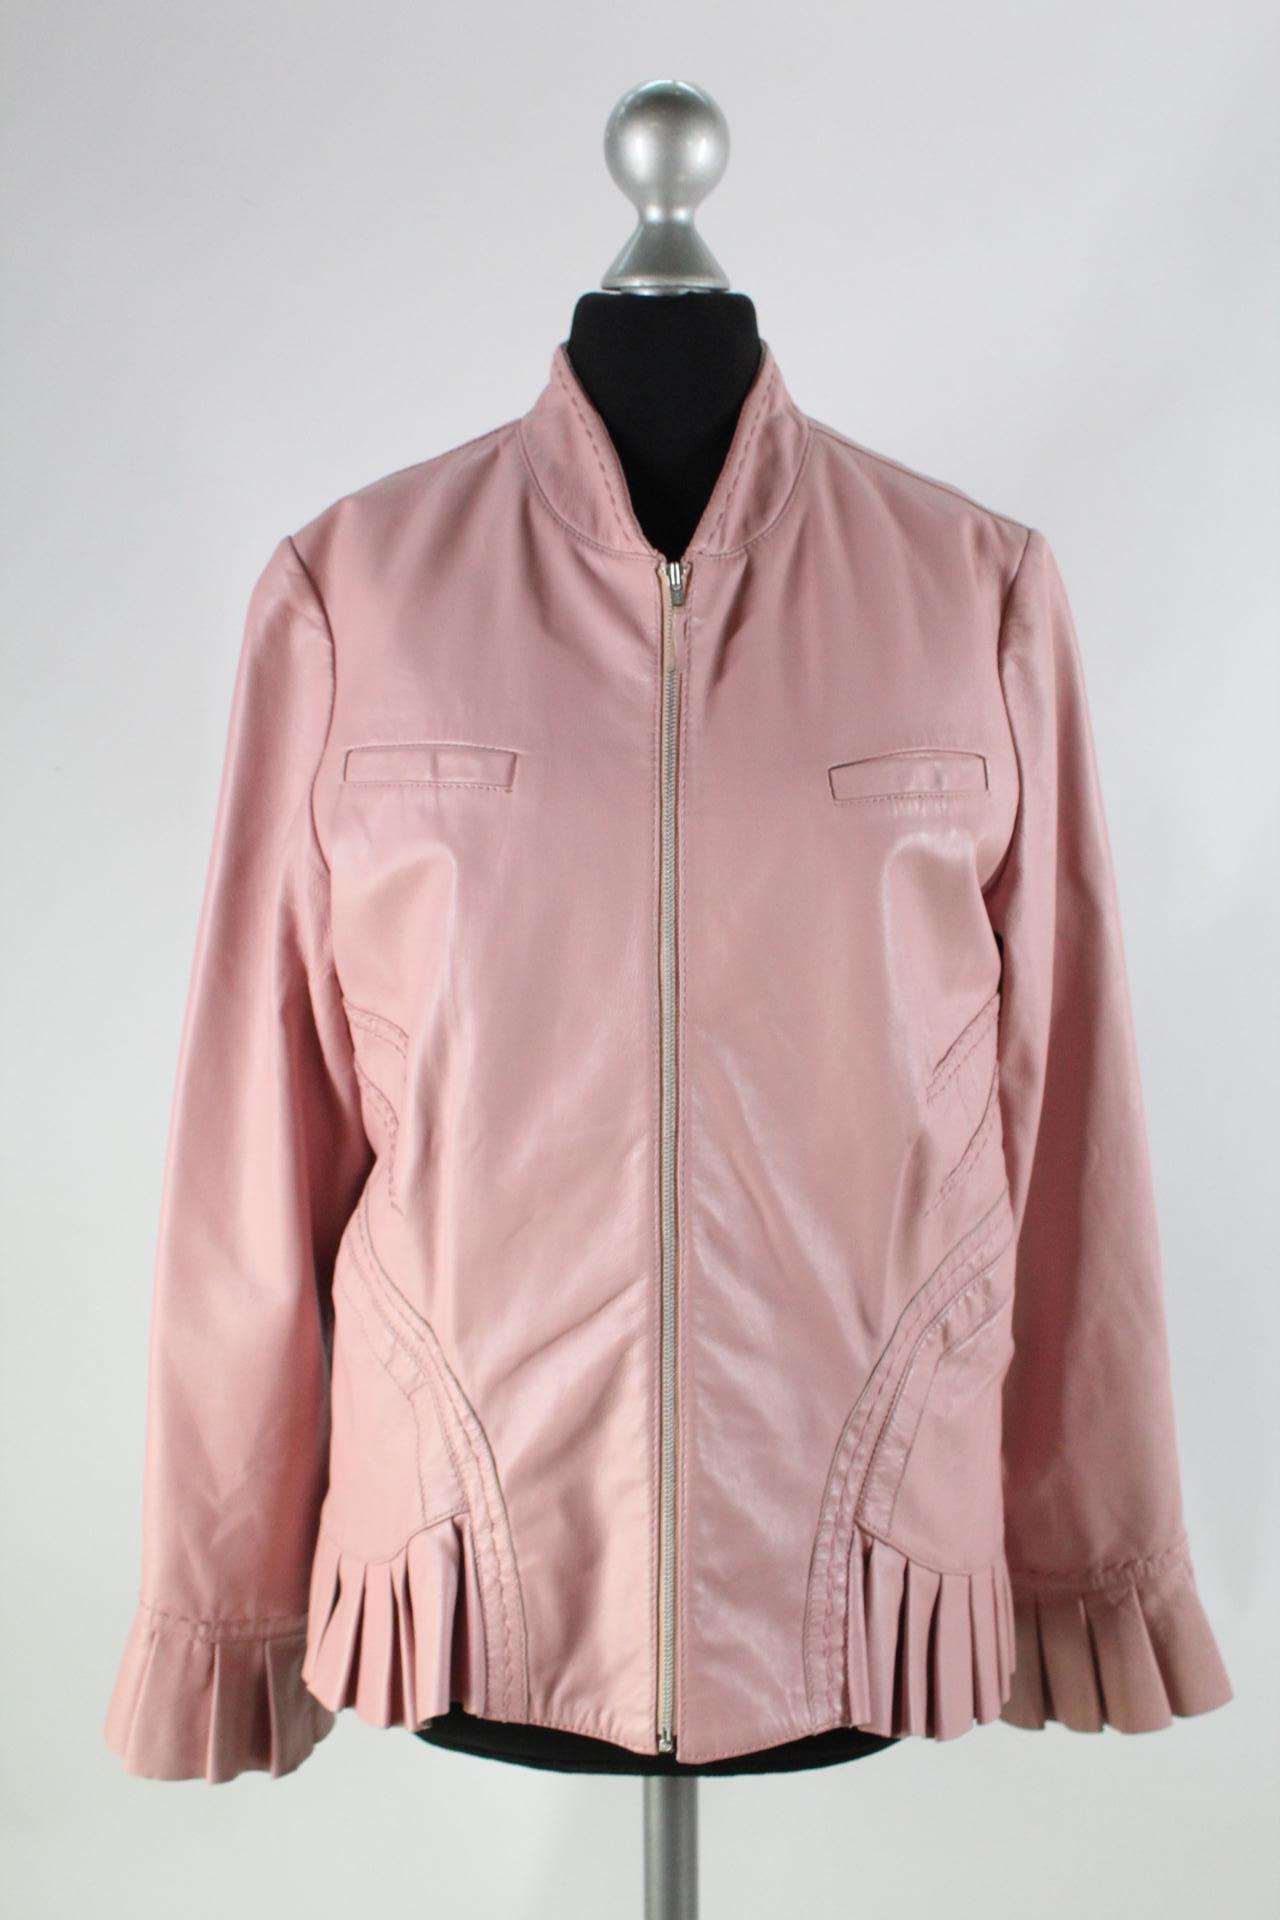 Garella Damen-Lederjacke rosa Größe T-4